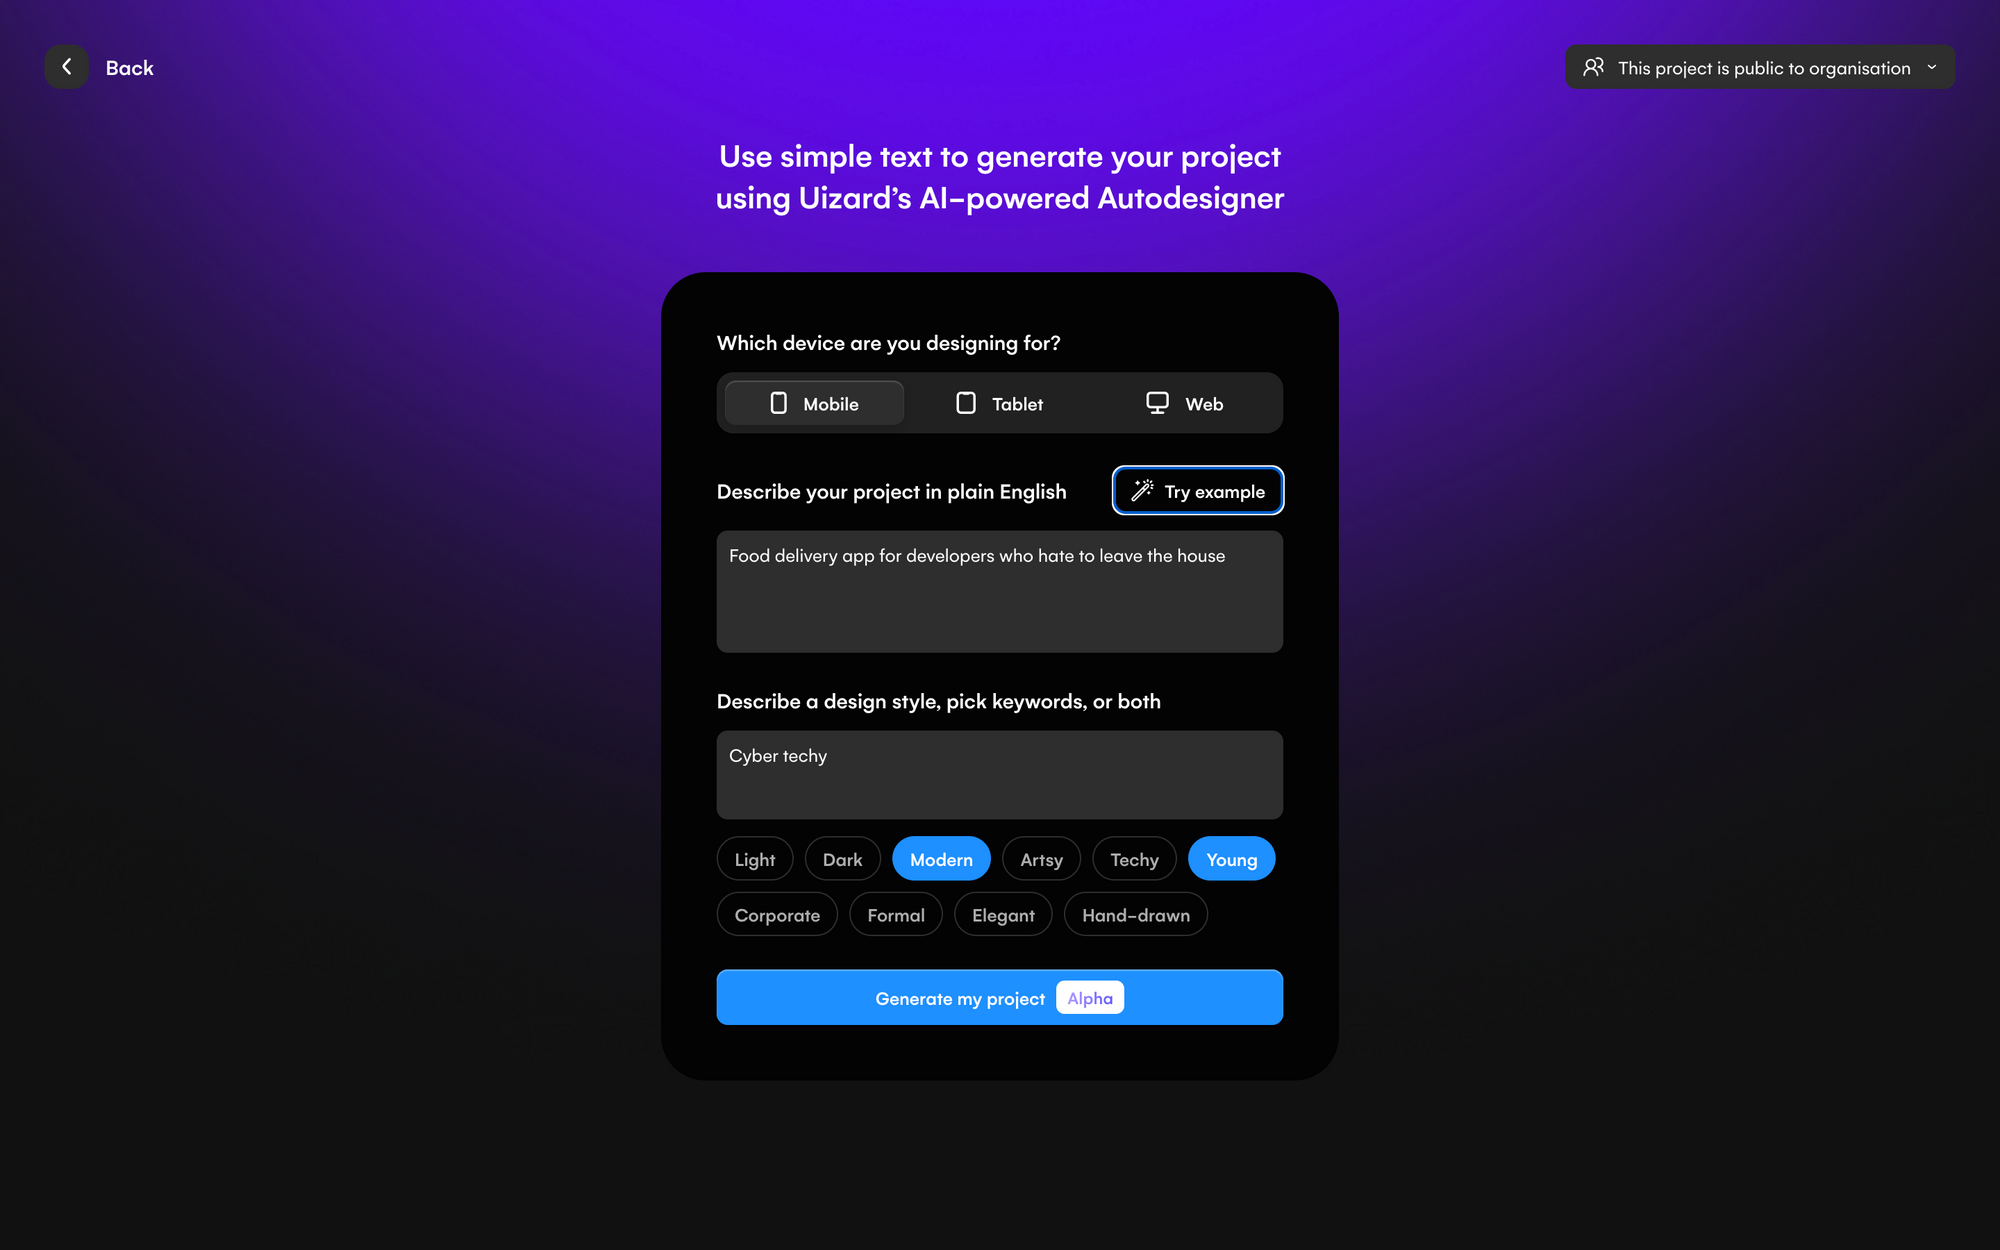 Autodesigner text prompt fields. Dark design with purple gradient and blue button